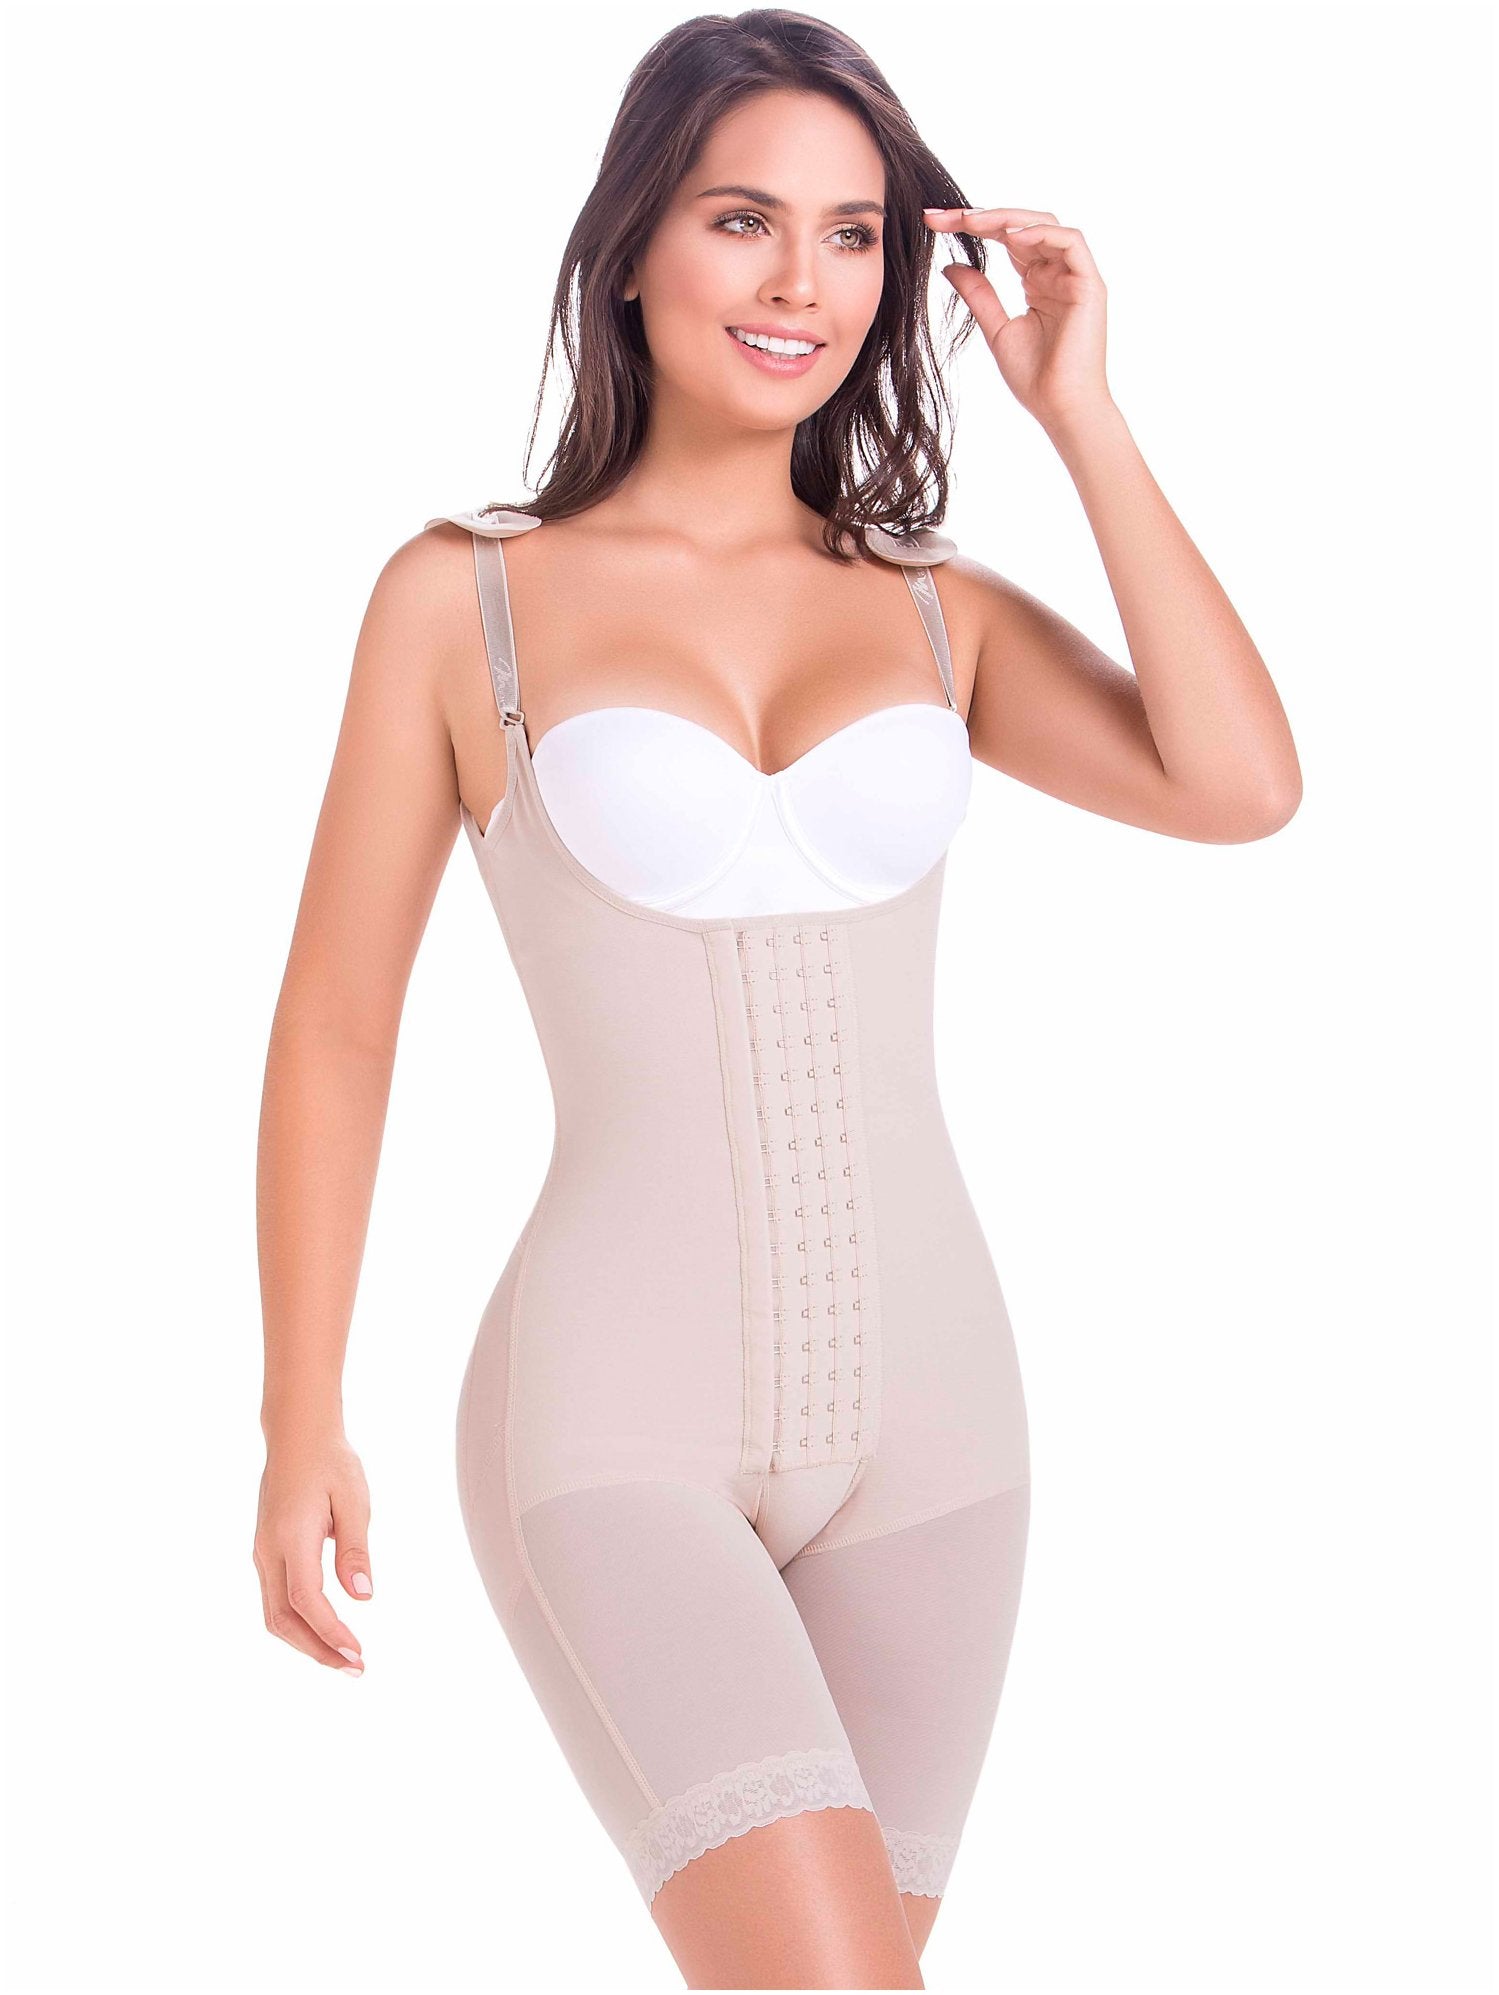  9334 Colombian Postpartum Girdles Post Surgery Compression  Garments After Liposuction Fajas Colombianas Postparto Abdominal Levanta  Pompis For Women Beige XL